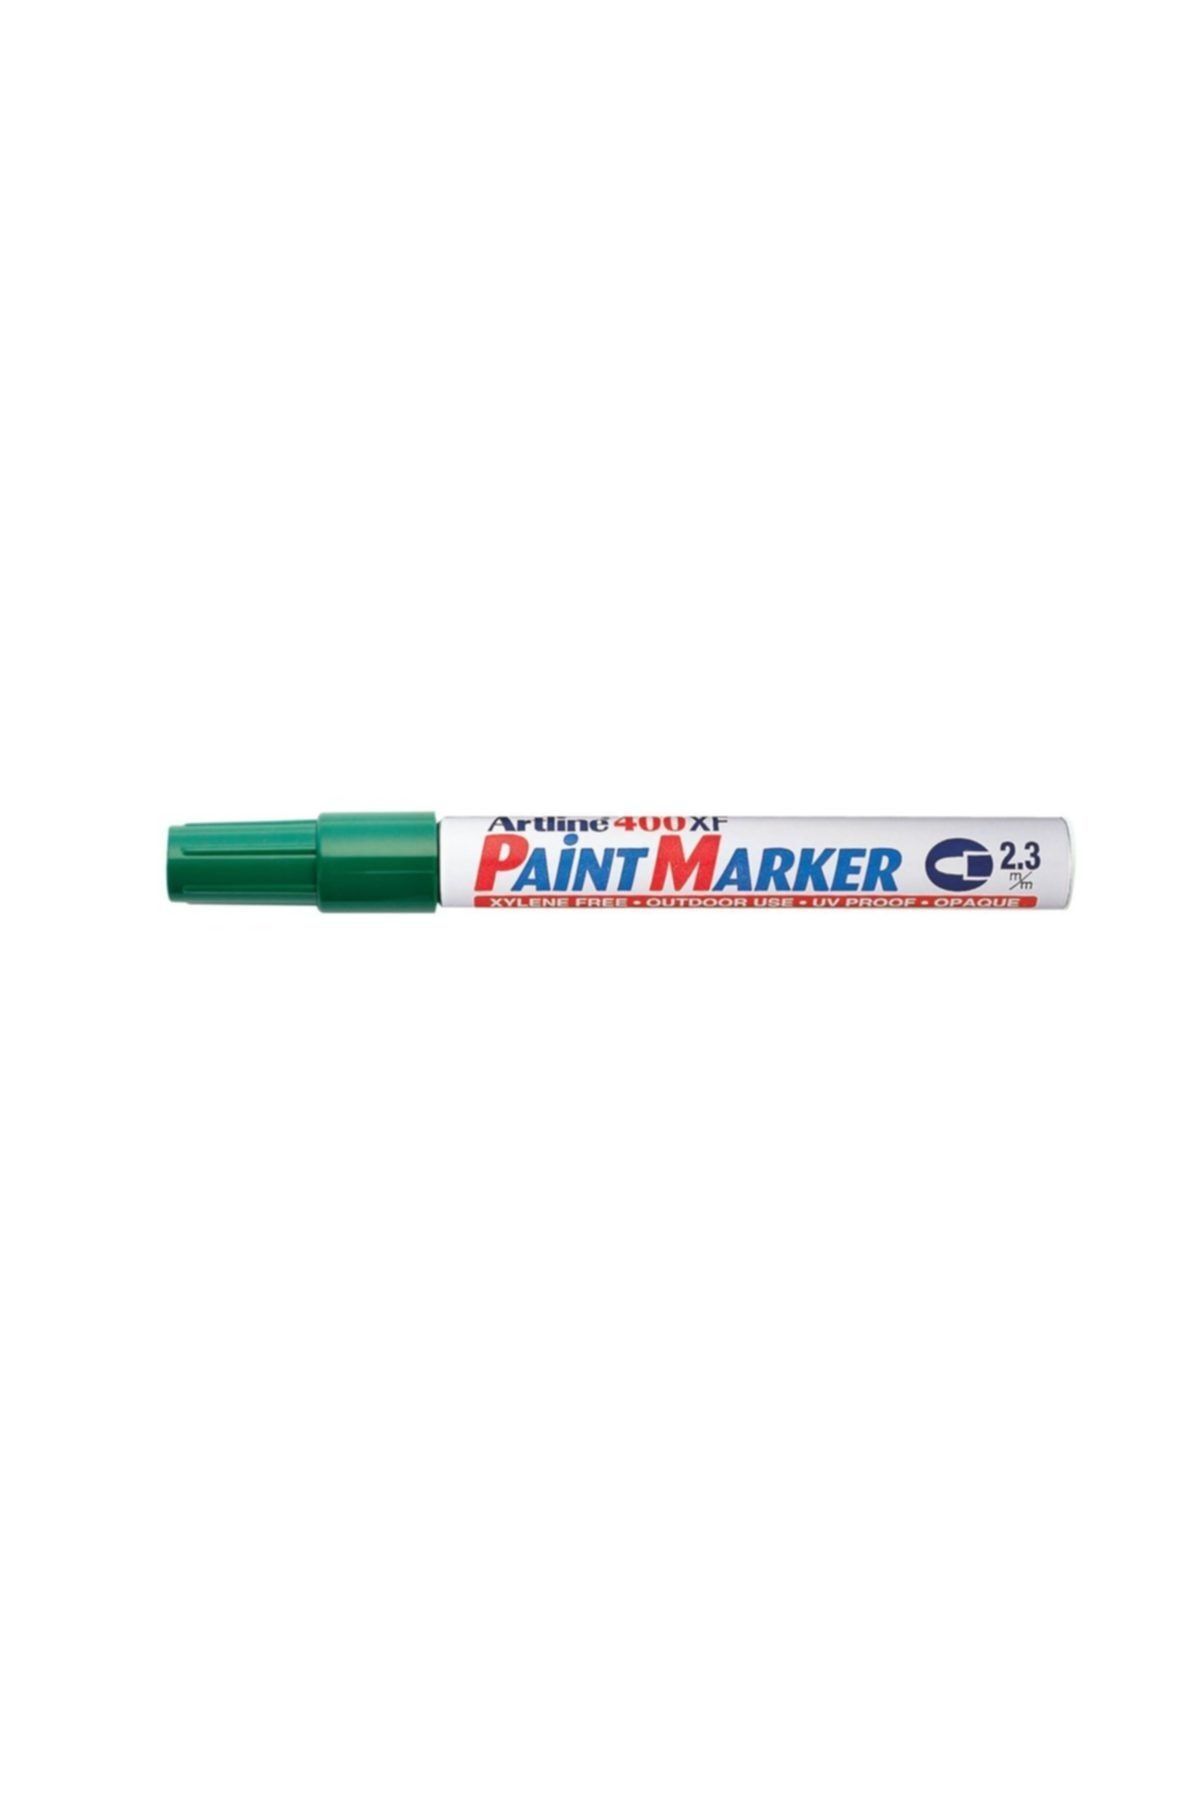 artline Ex-400xf Yeşil Marker Kalem 2.3mm